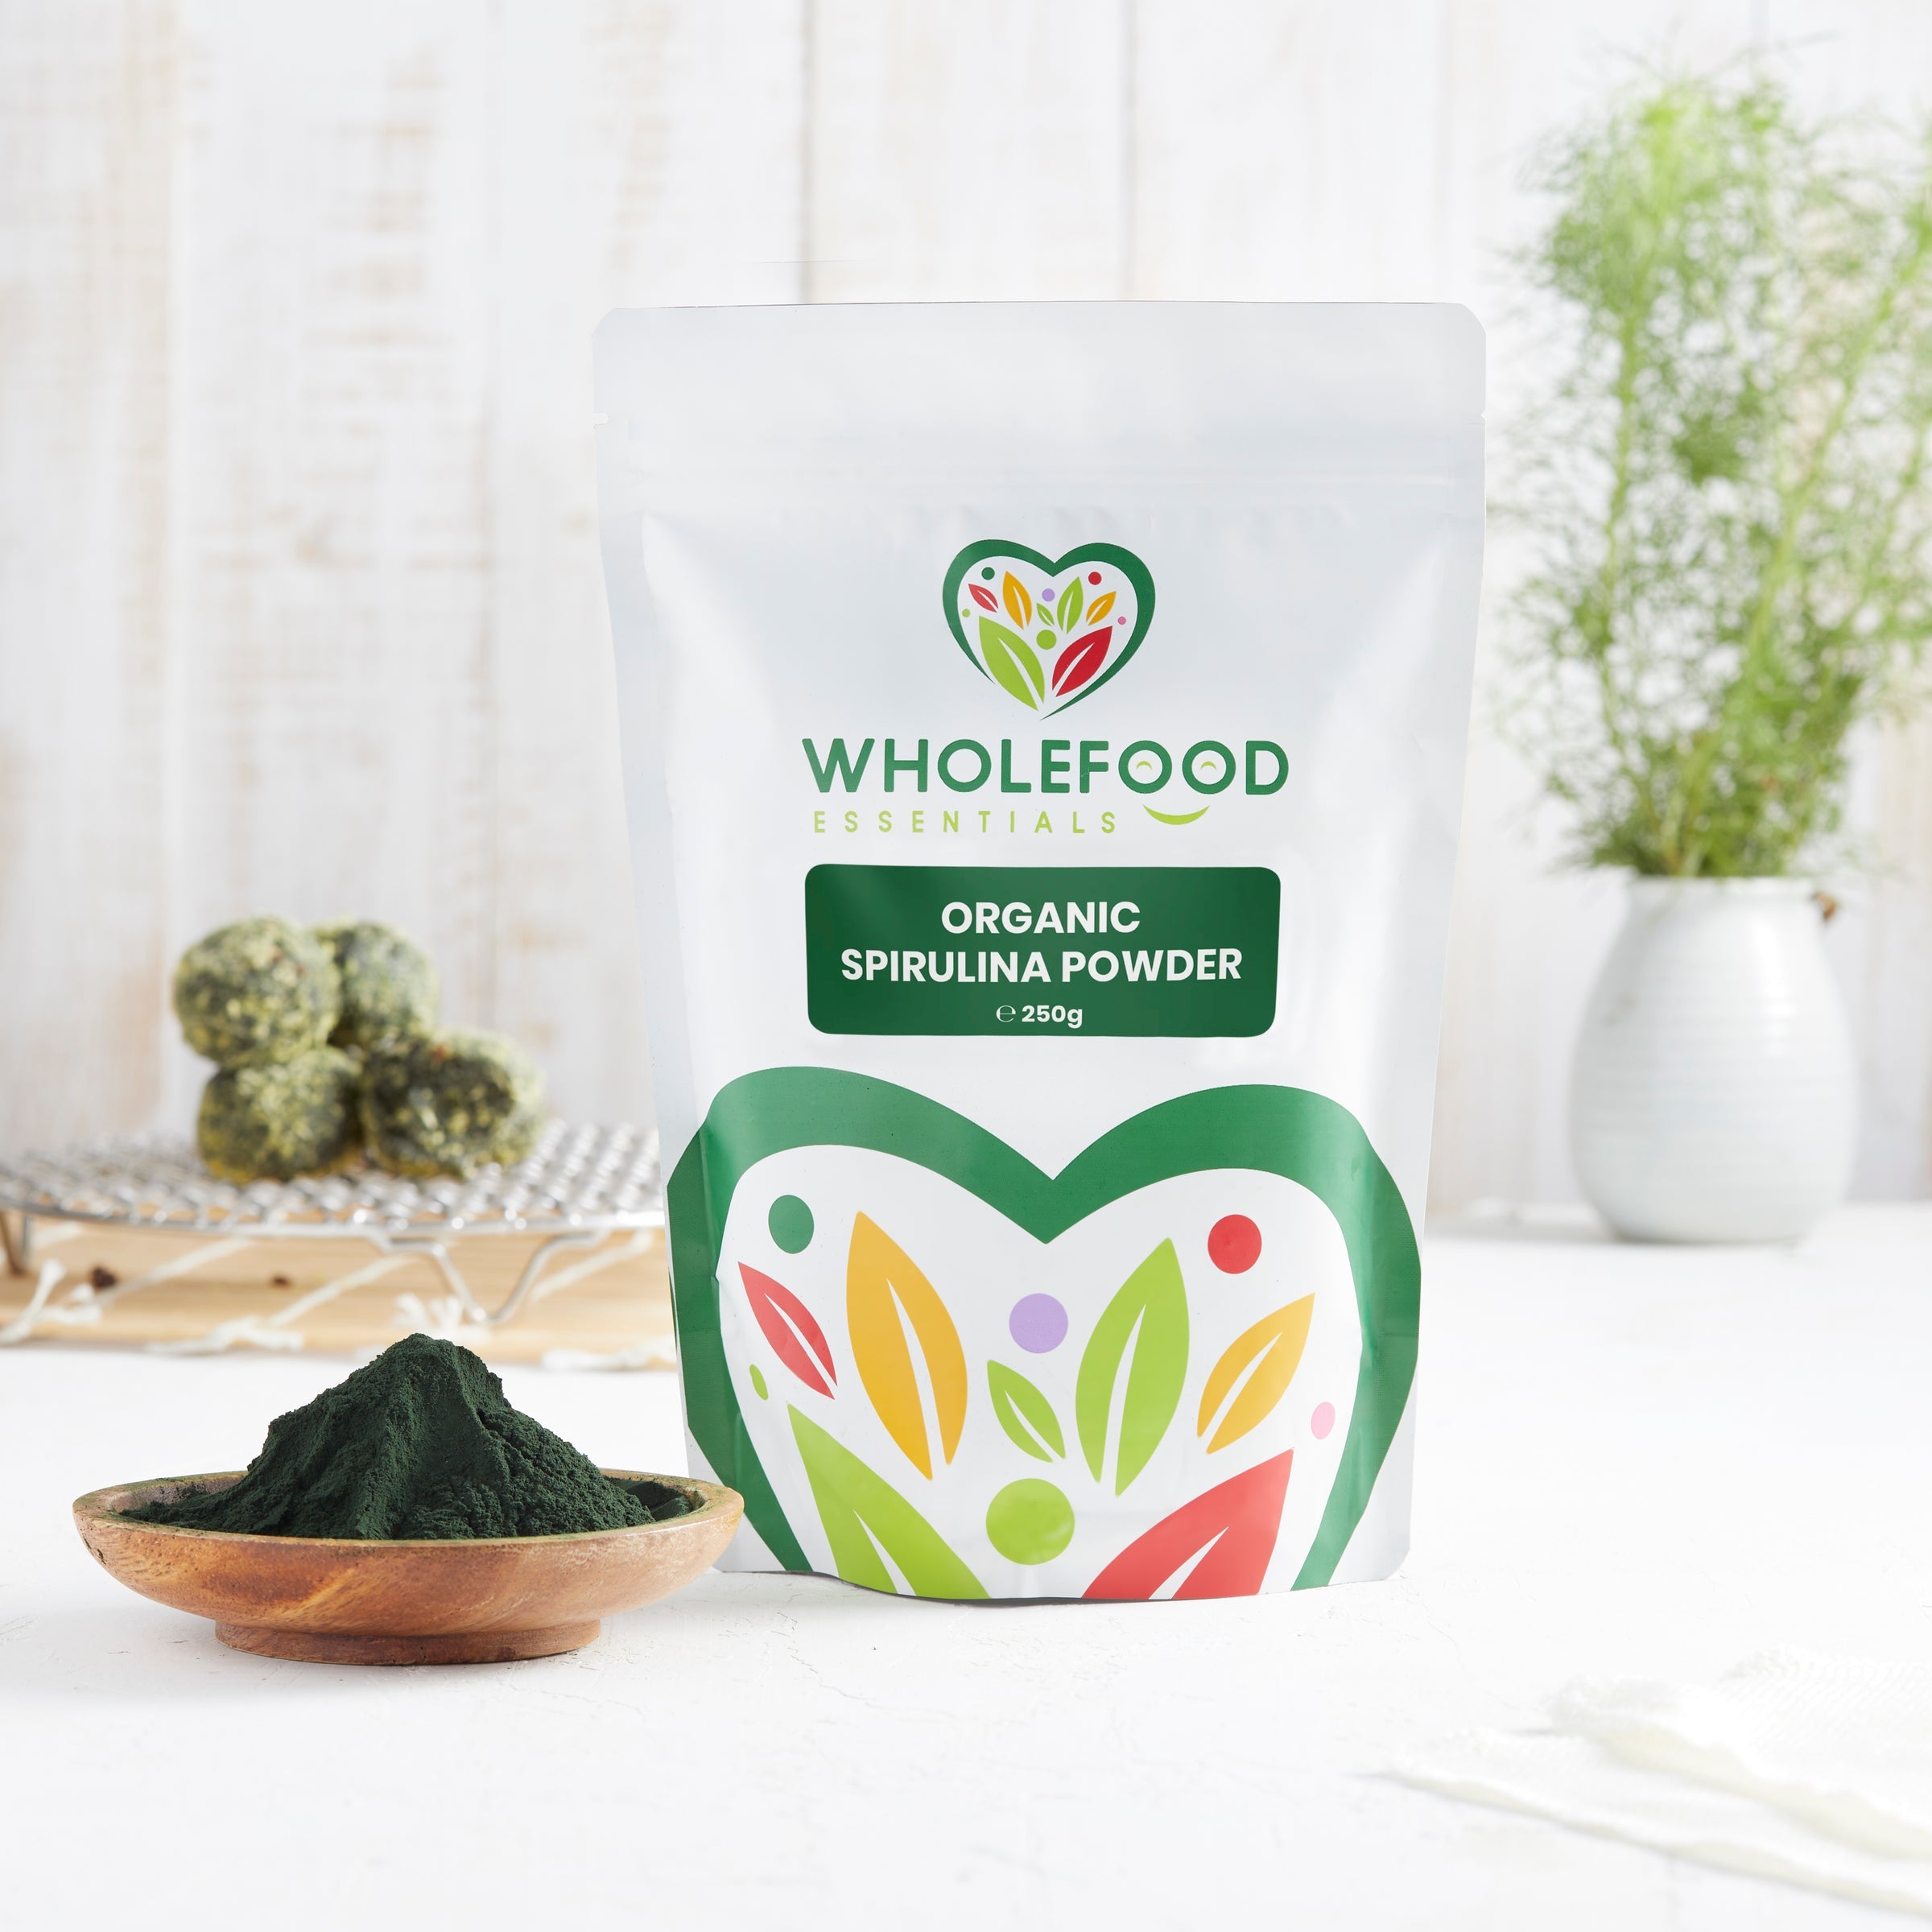 Organic Spirulina Powder Wholefood Essentials